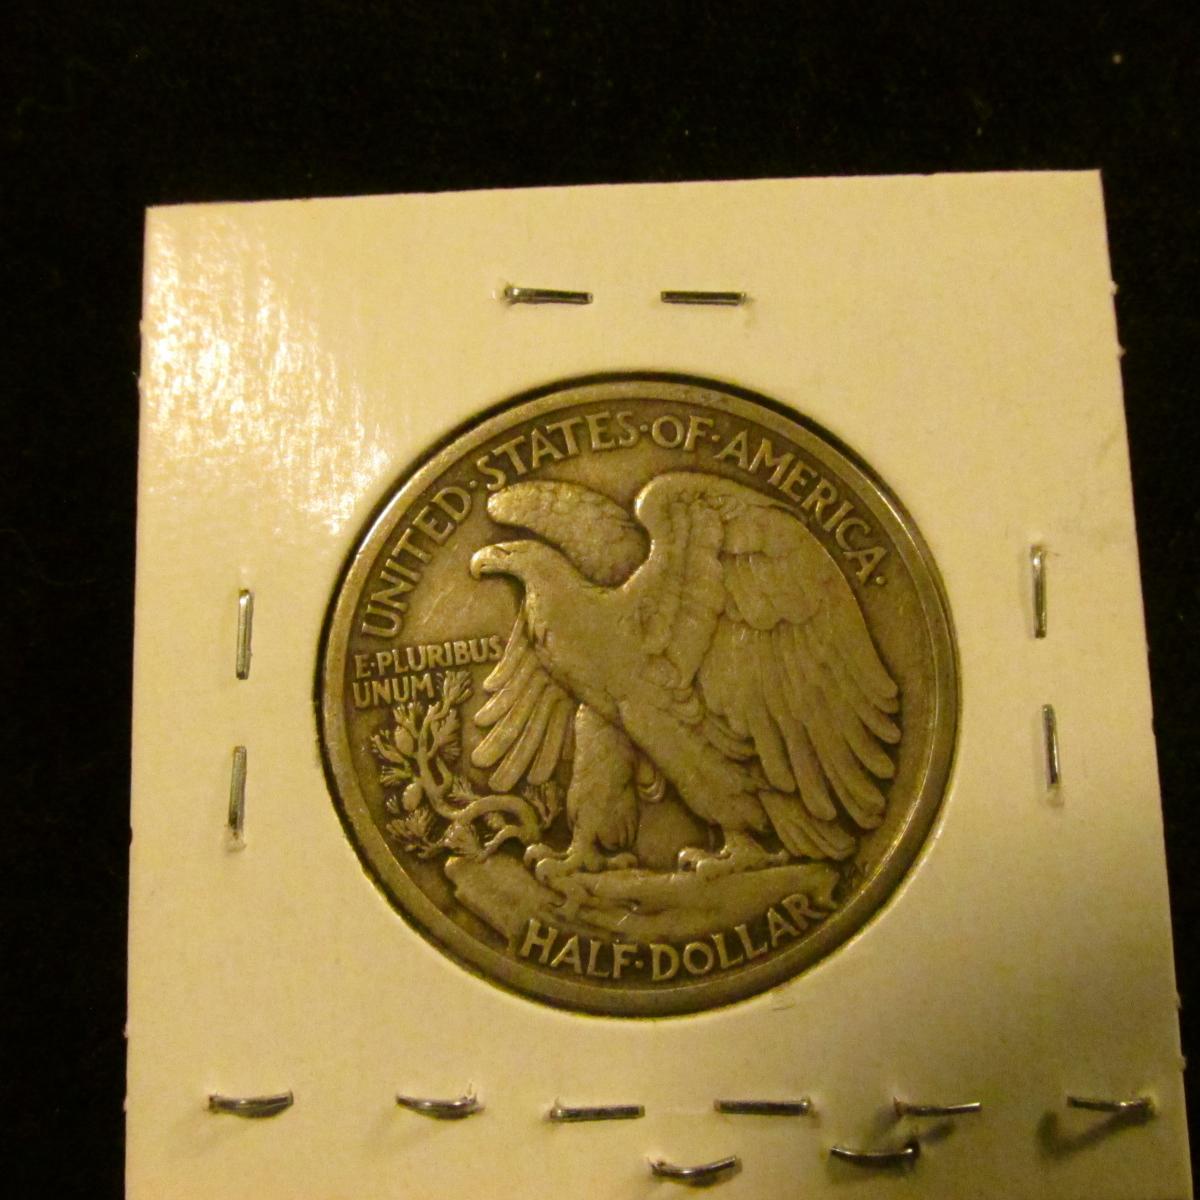 977 . 1917 Walking Liberty Half Dollar, VF30, sharp details, value